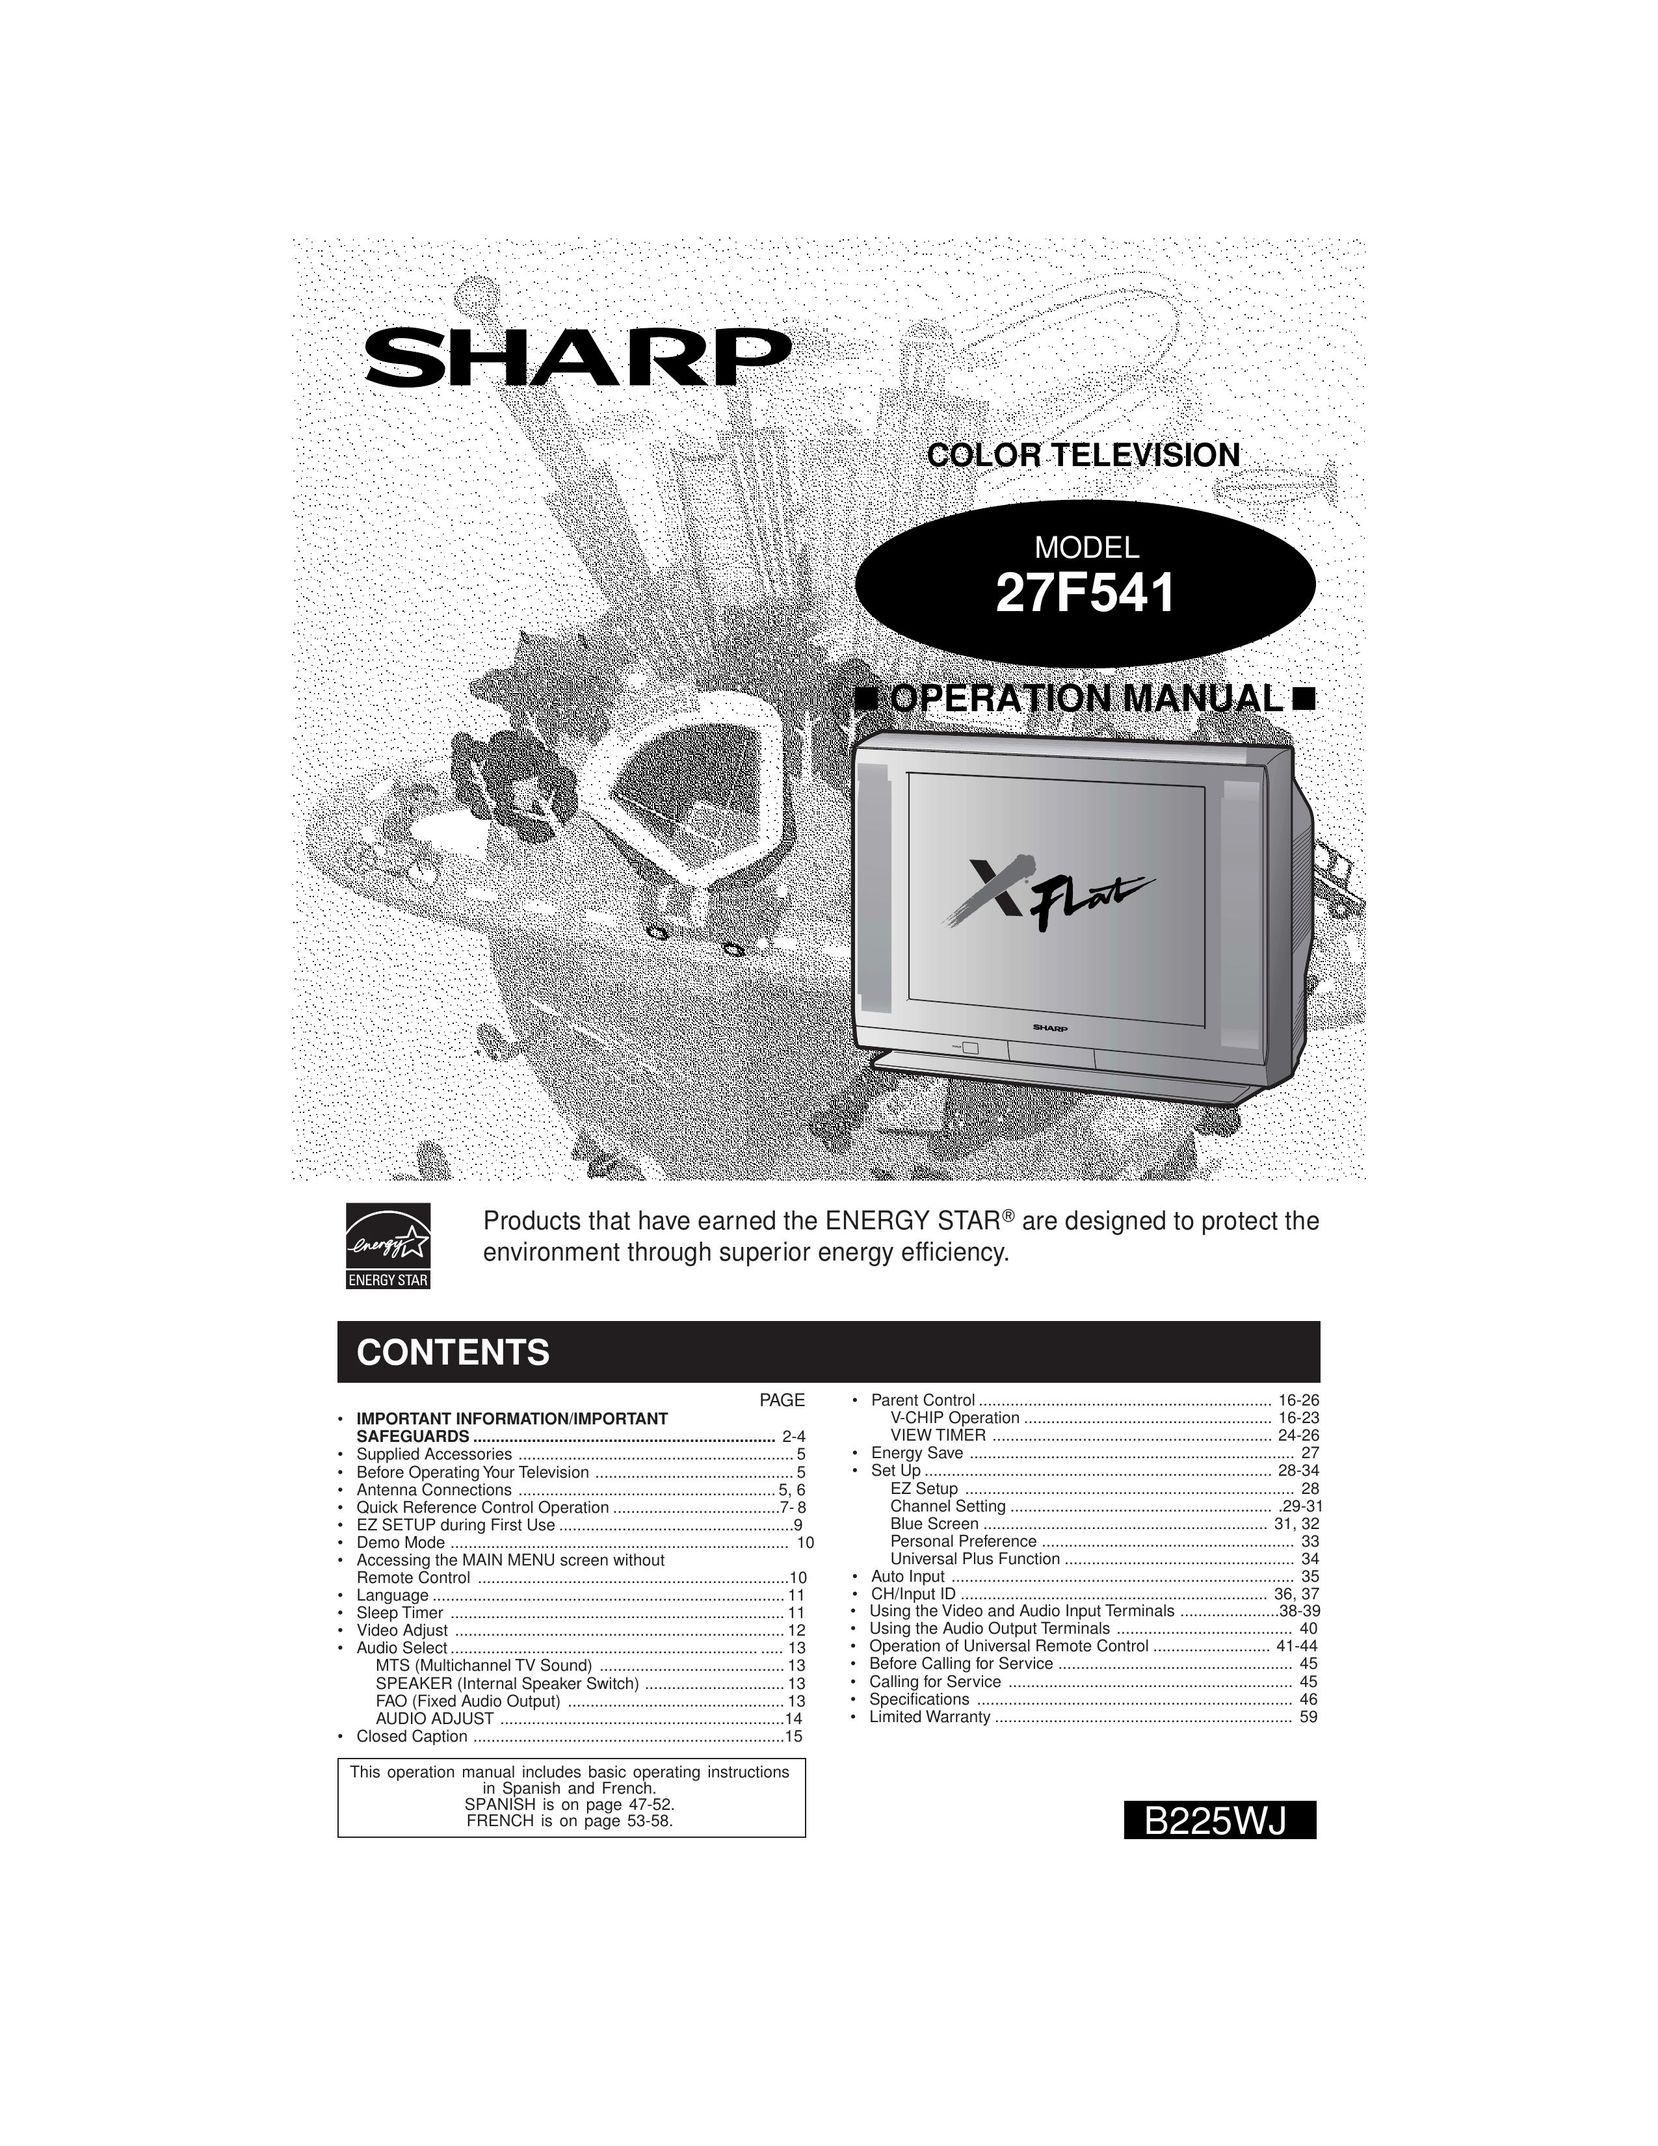 Sharp 27F541 CRT Television User Manual